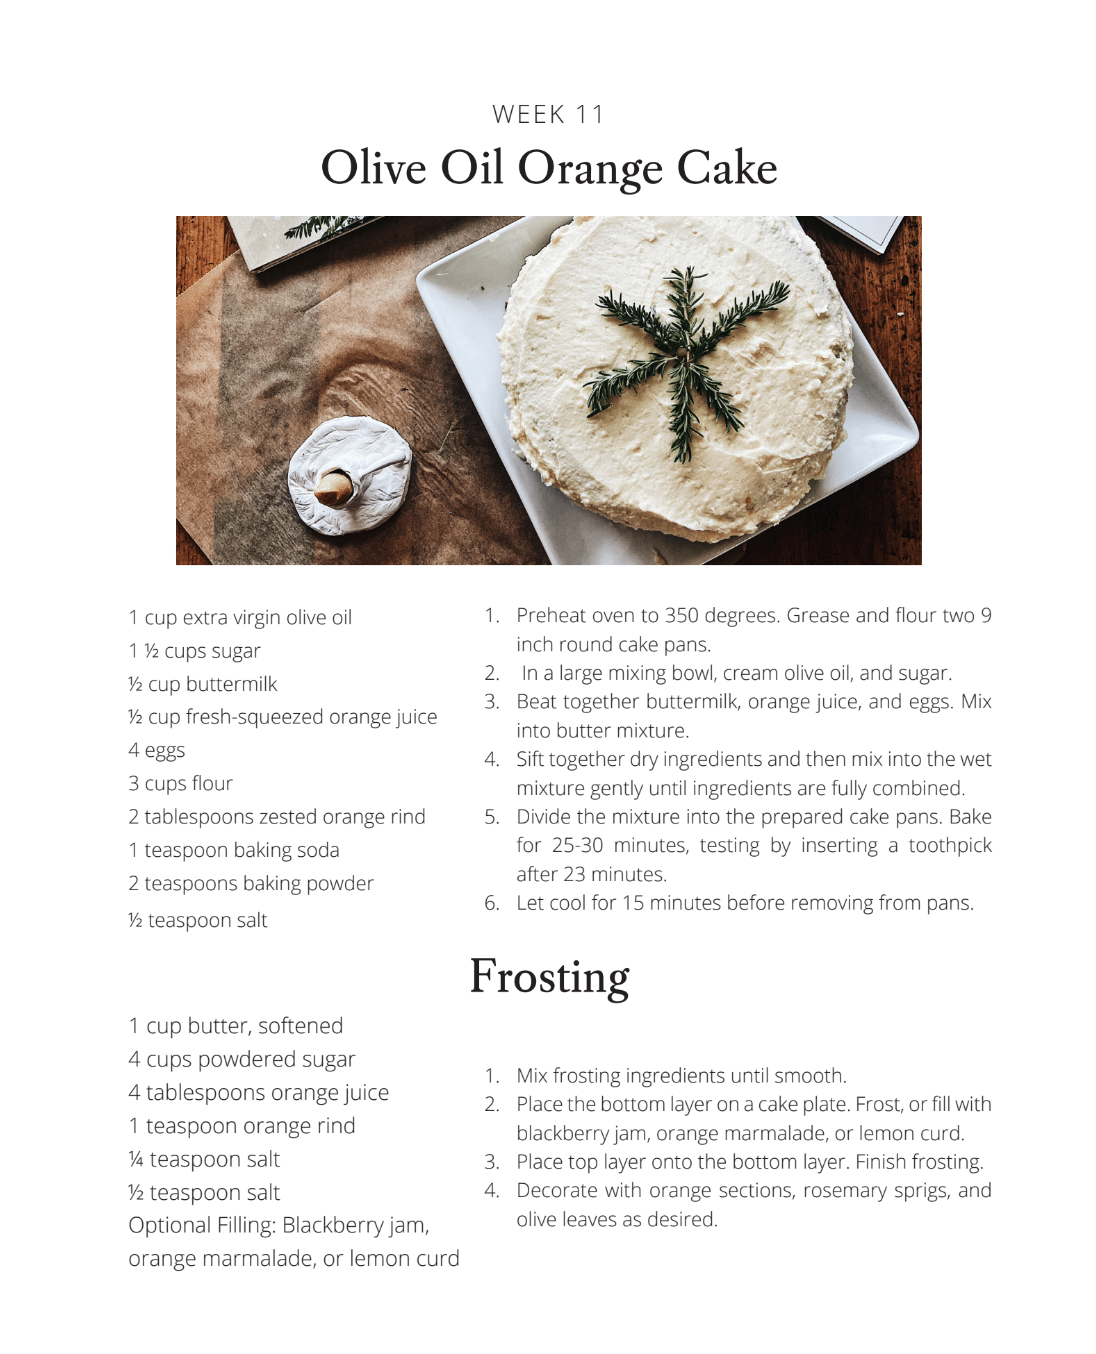 Homeschool sample recipe, Olive Oil Orange Cake with Frosting.